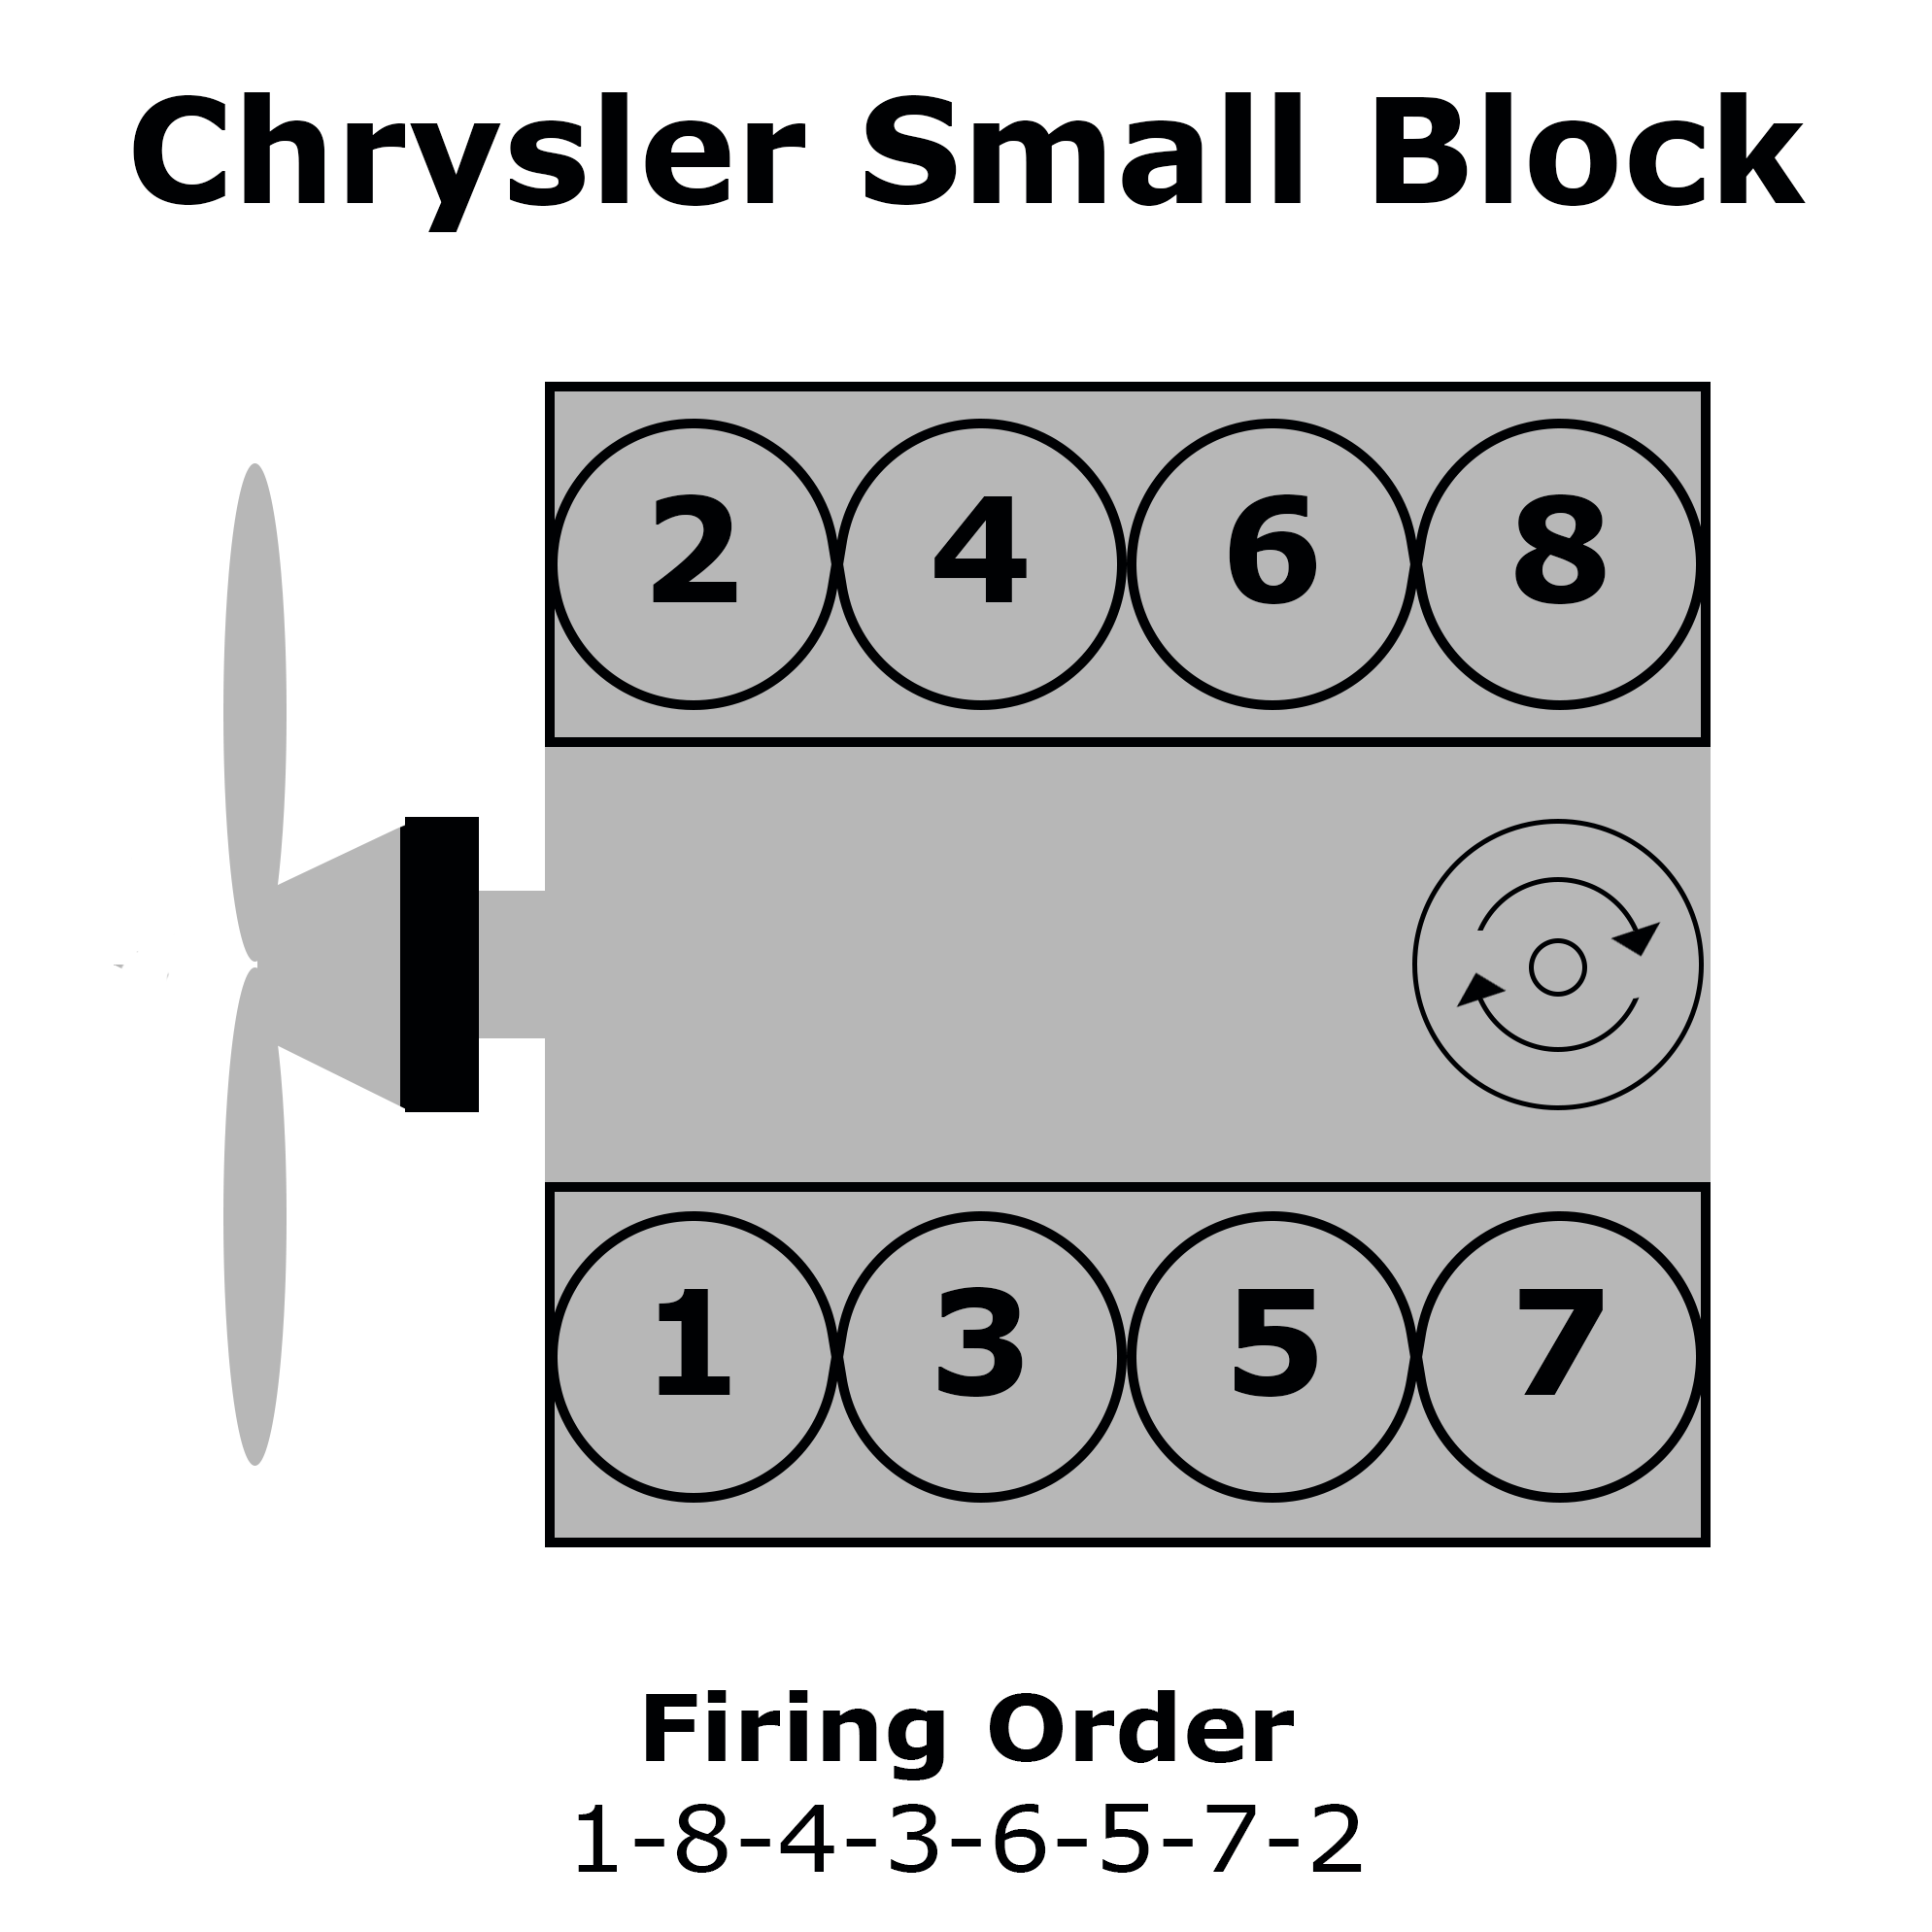 Chrysler Small Block V8 Cylinder Numbering, Distributor Rotation, and Firing Order